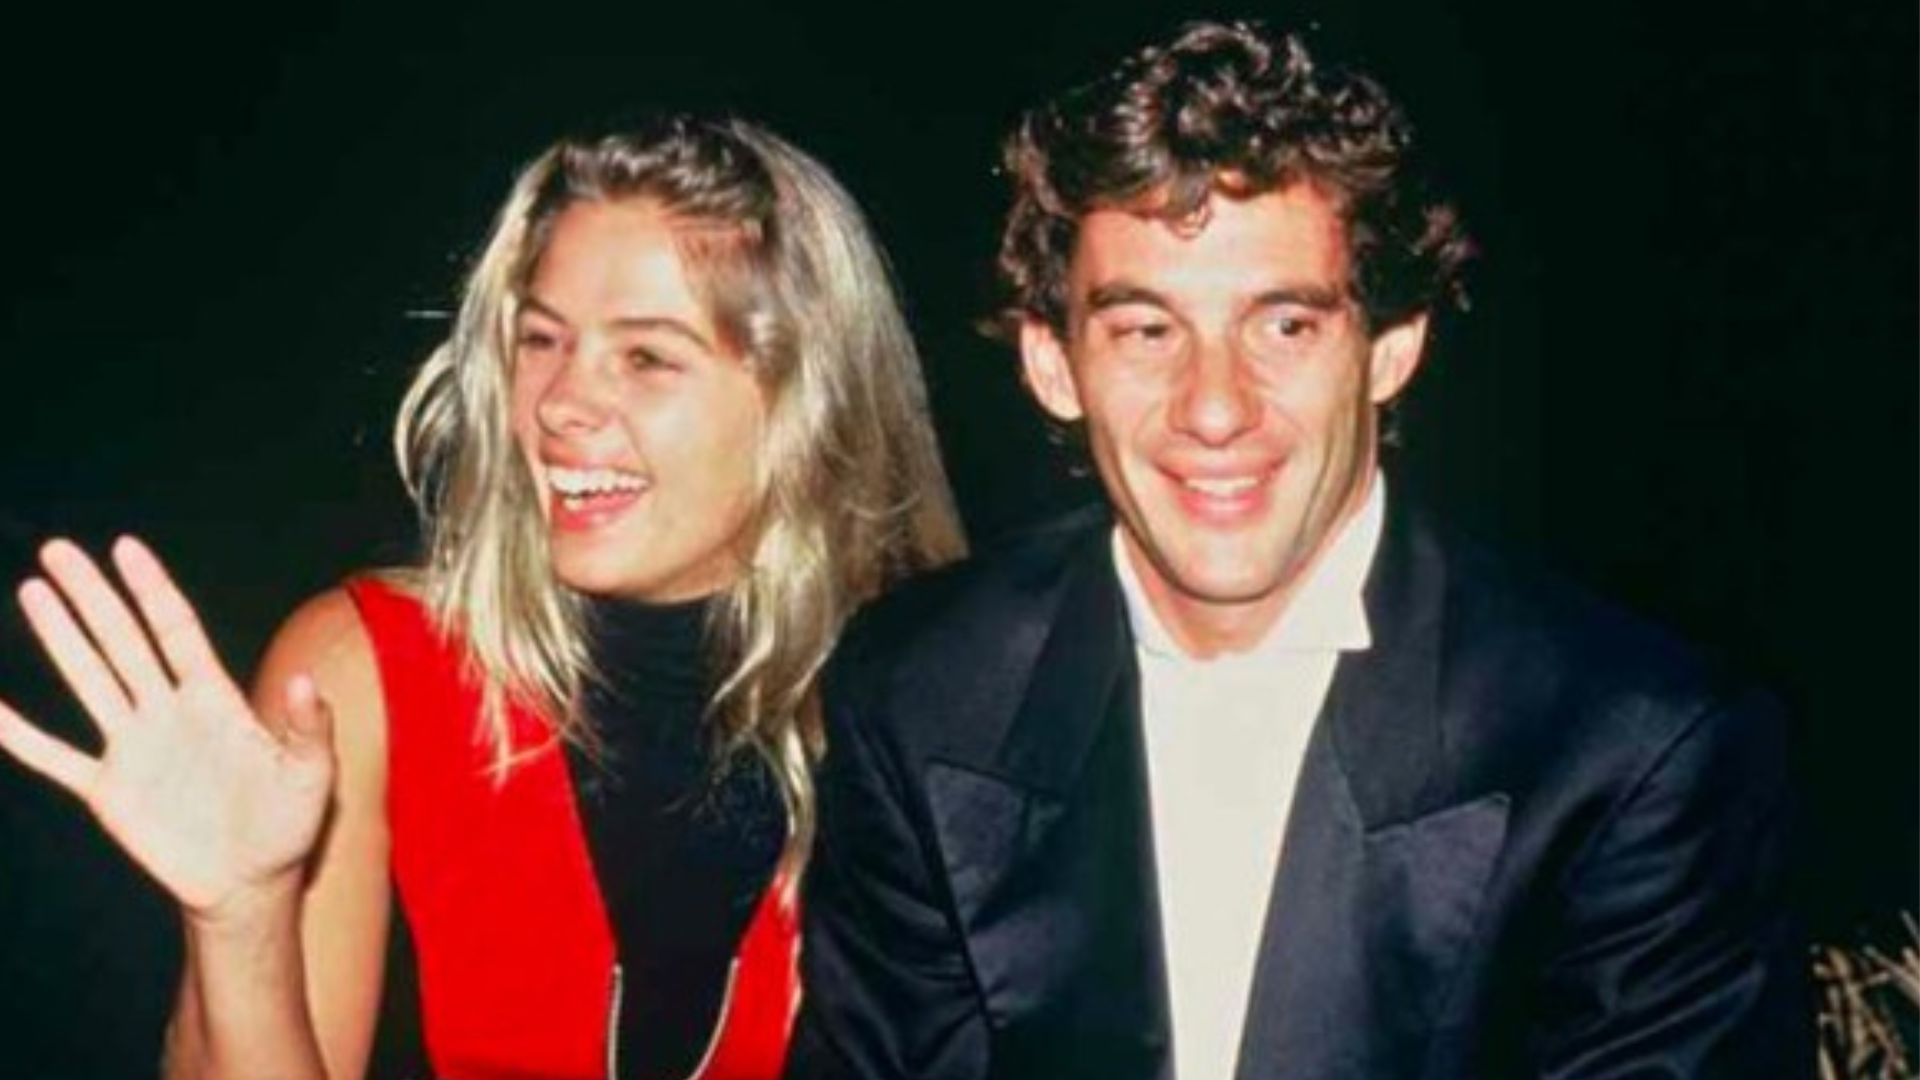 Adriane Galisteu e Ayrton Senna